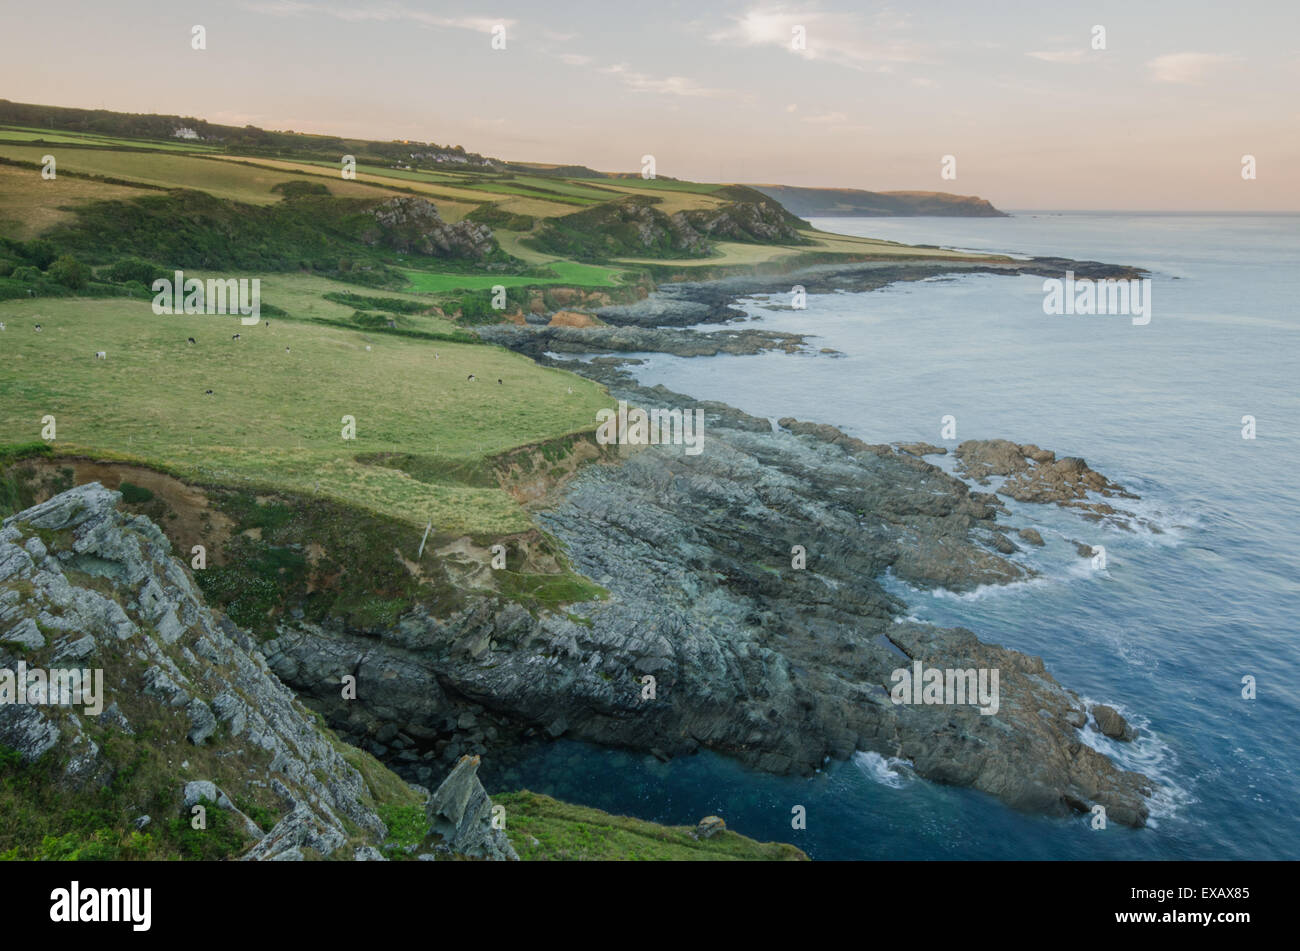 View along the coastline at East Prawle, Gammon Head, Devon, West Coast, UK Stock Photo